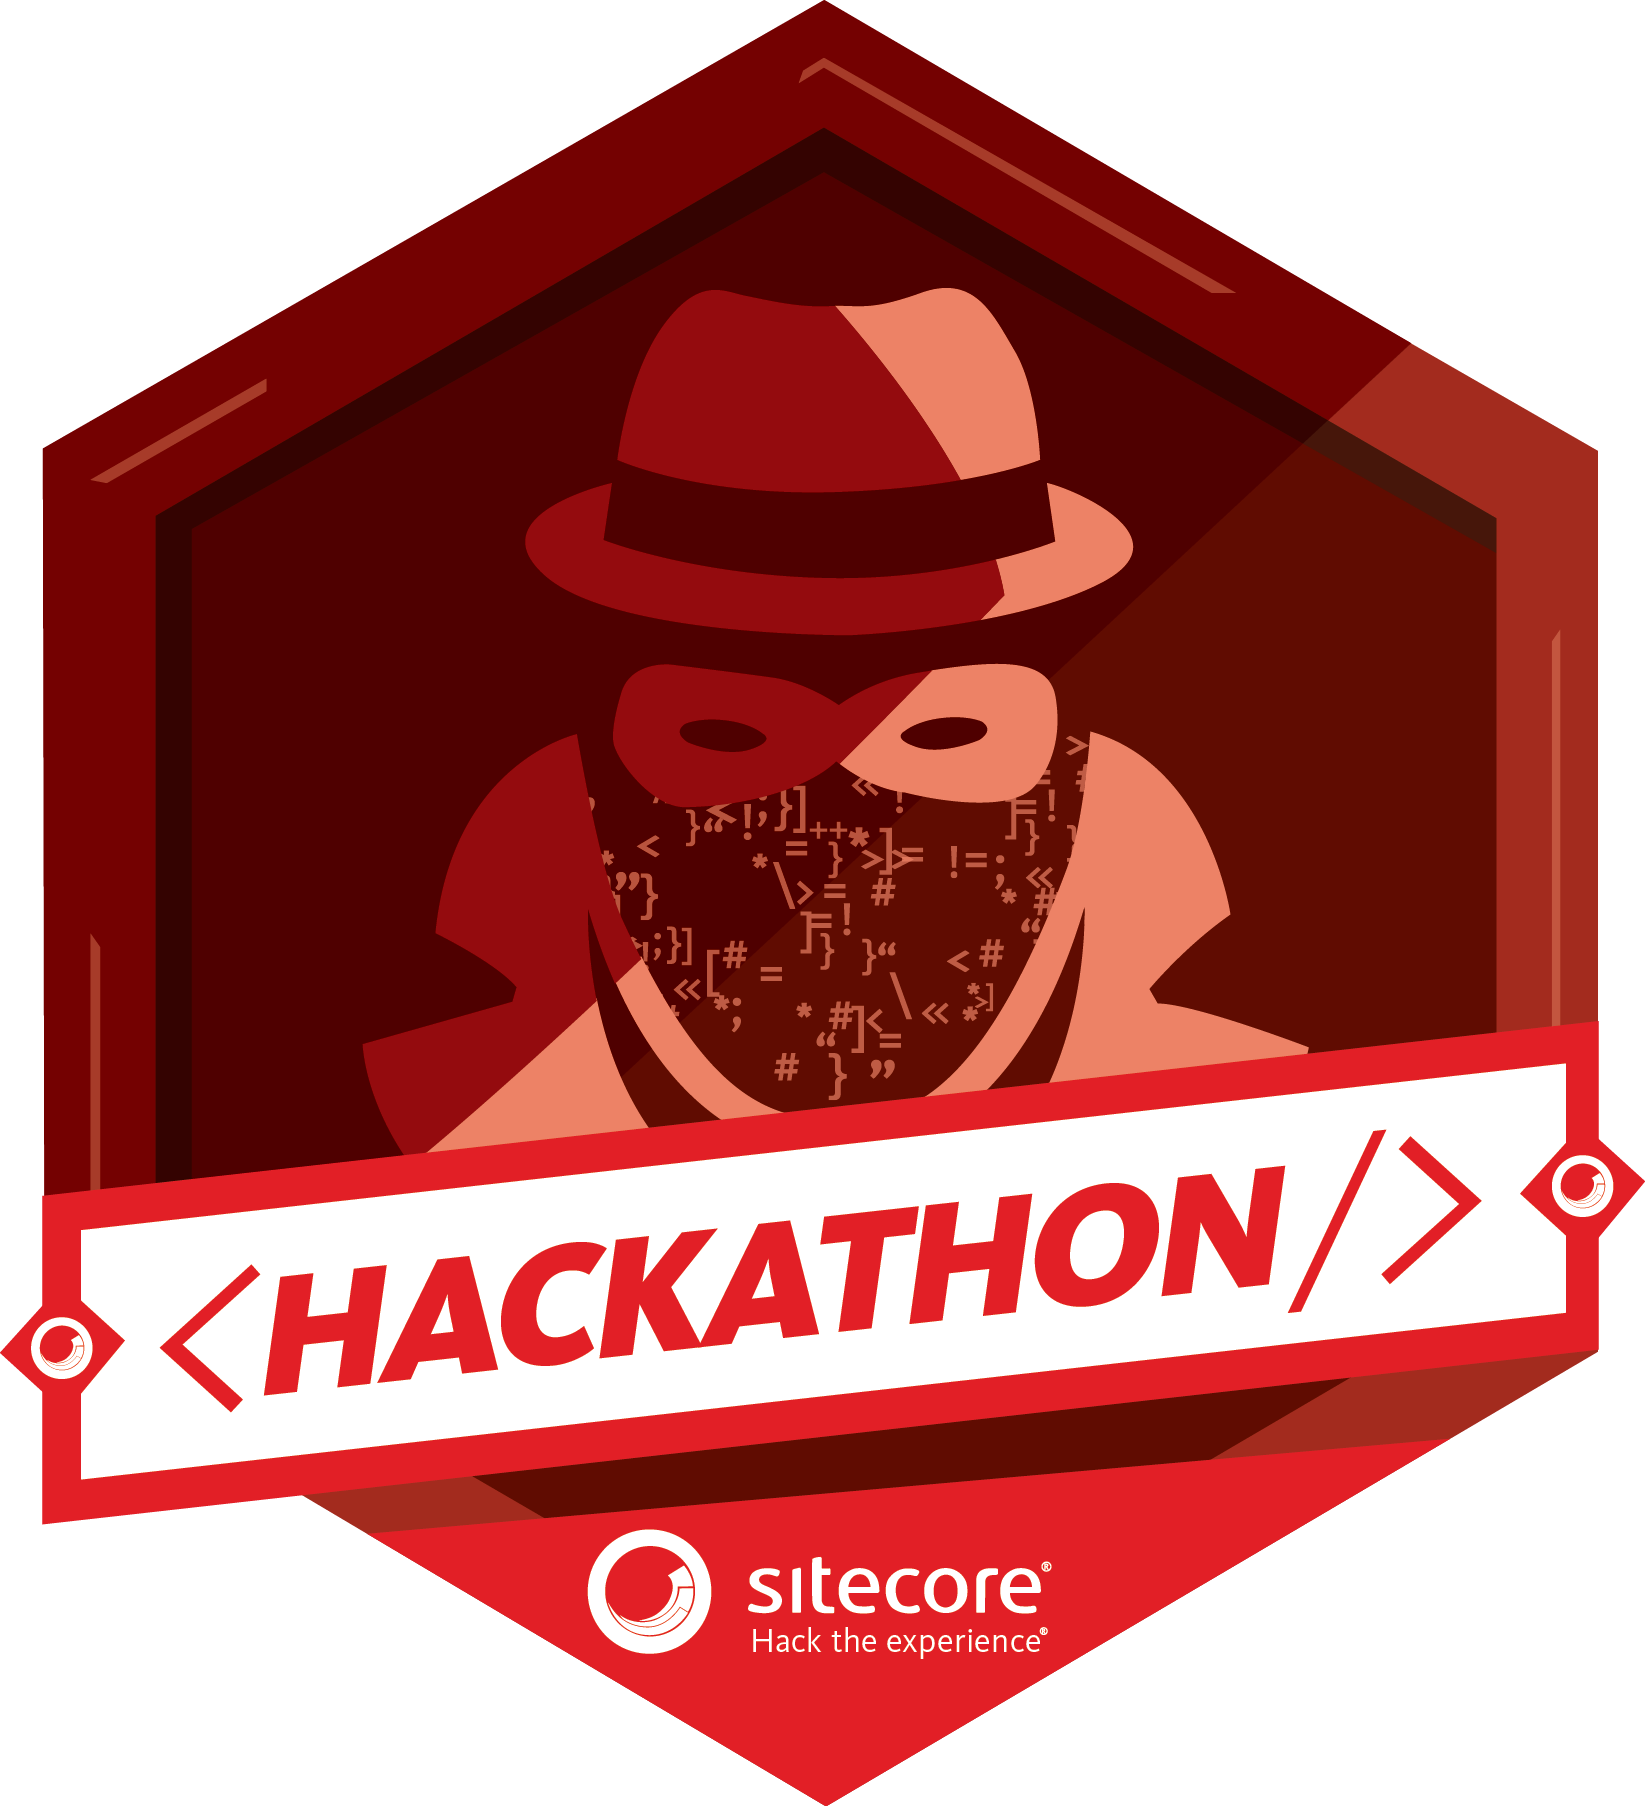 Sitecore Hackathon 2019 - My Experience